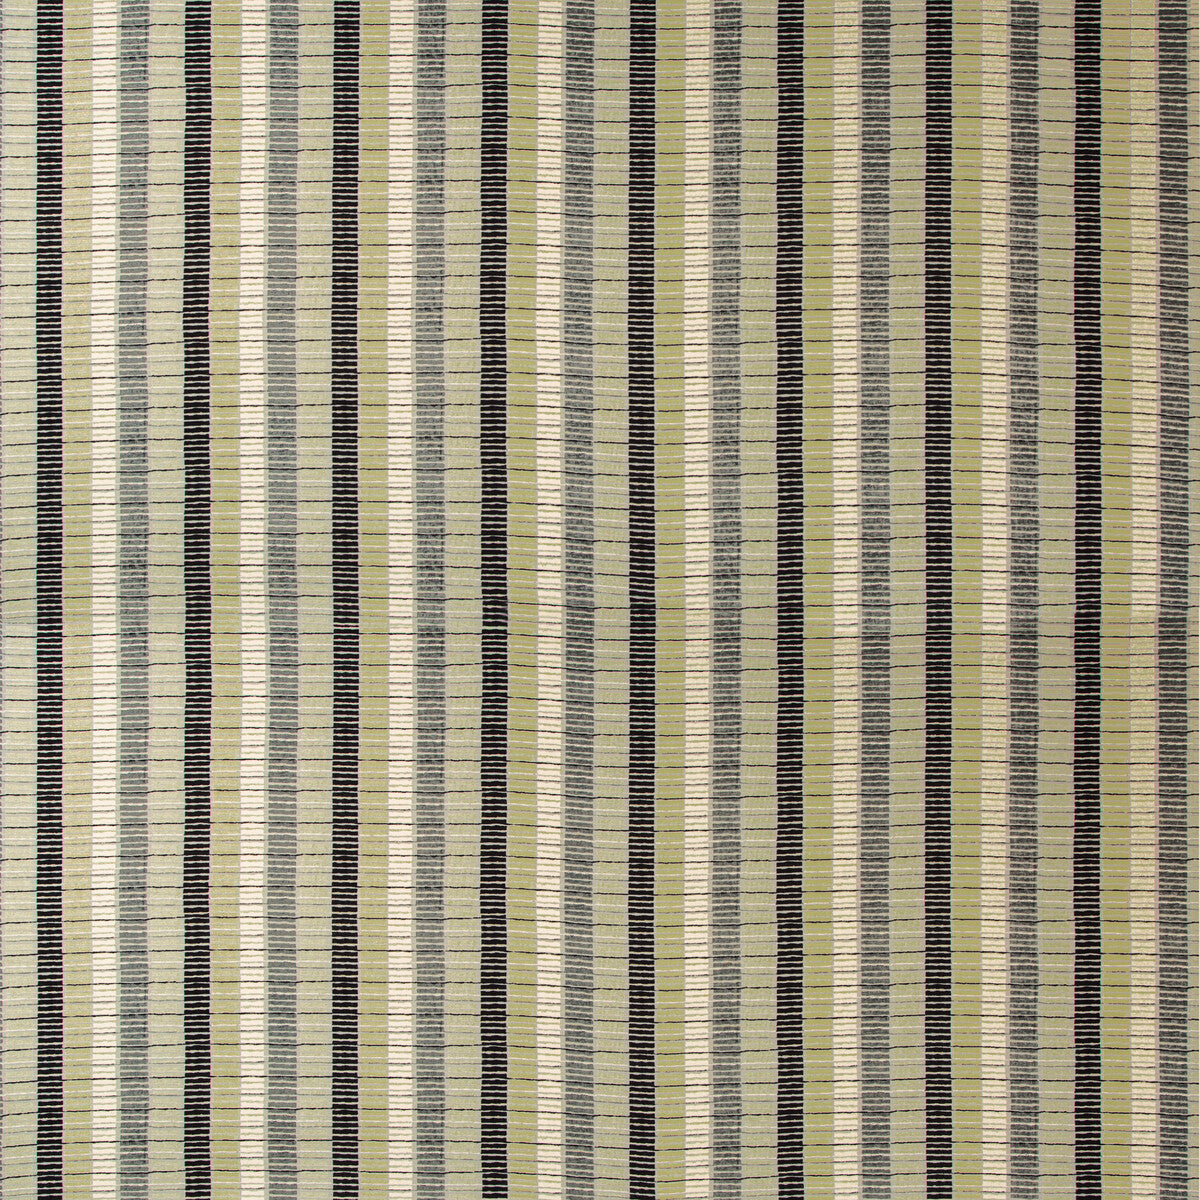 Lj Grw fabric - pattern 2019148.218.0 - by Lee Jofa Modern in the Kw Terra Firma III Indoor Outdoor collection